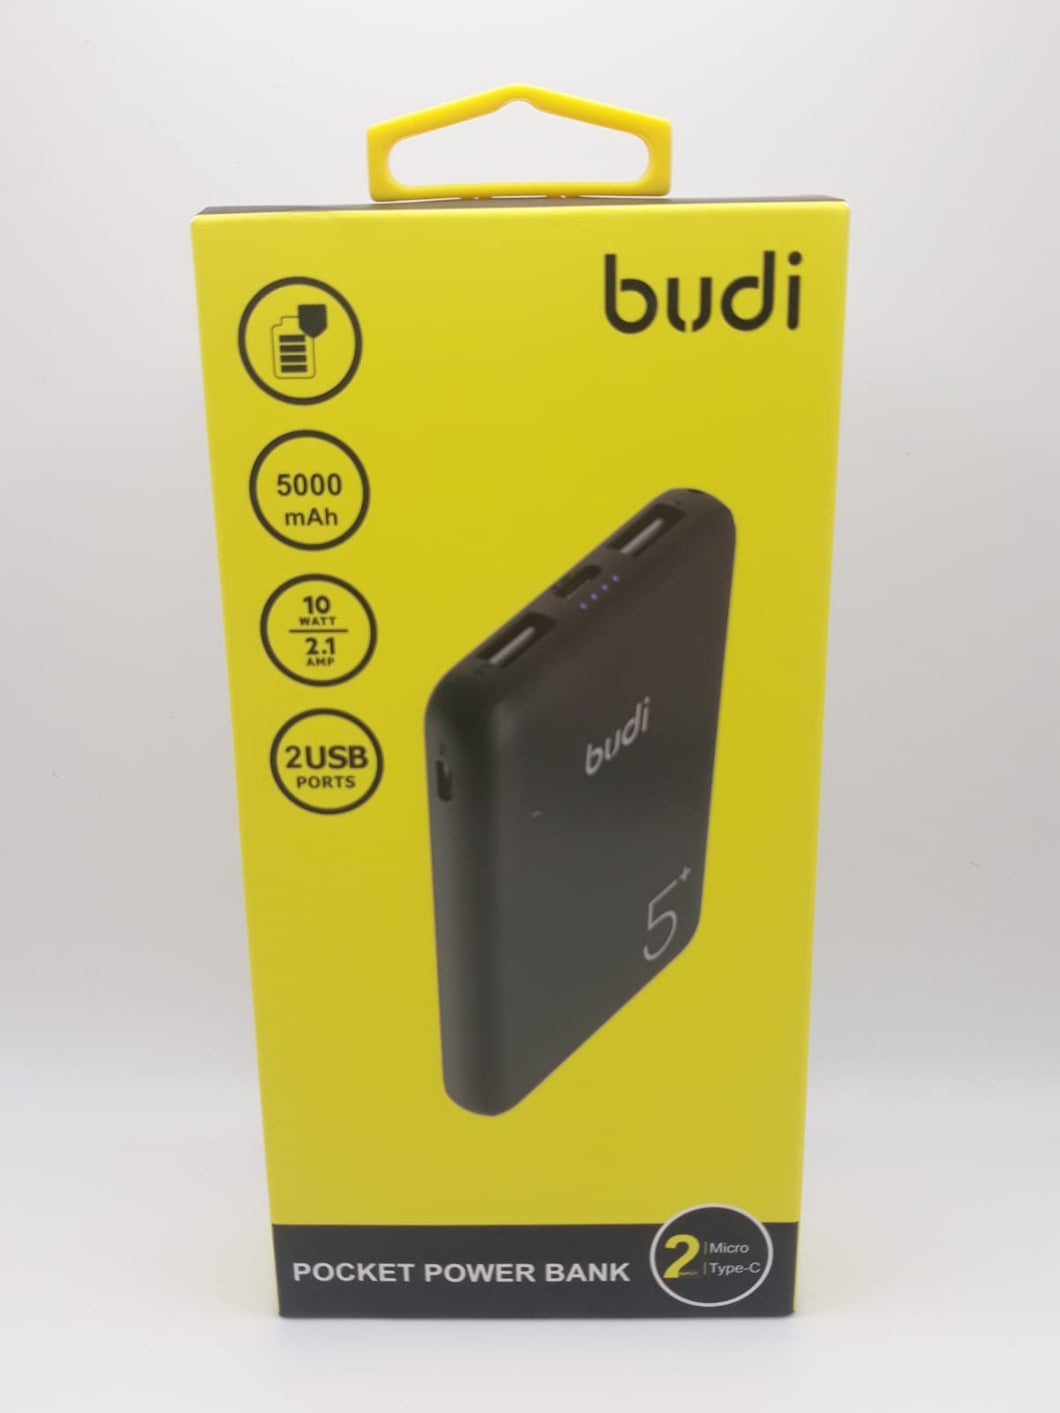 Budi Pocket Powerbank 5000Mah Fast Charge 2.1Amps Twin USB Smartphones & Tablets